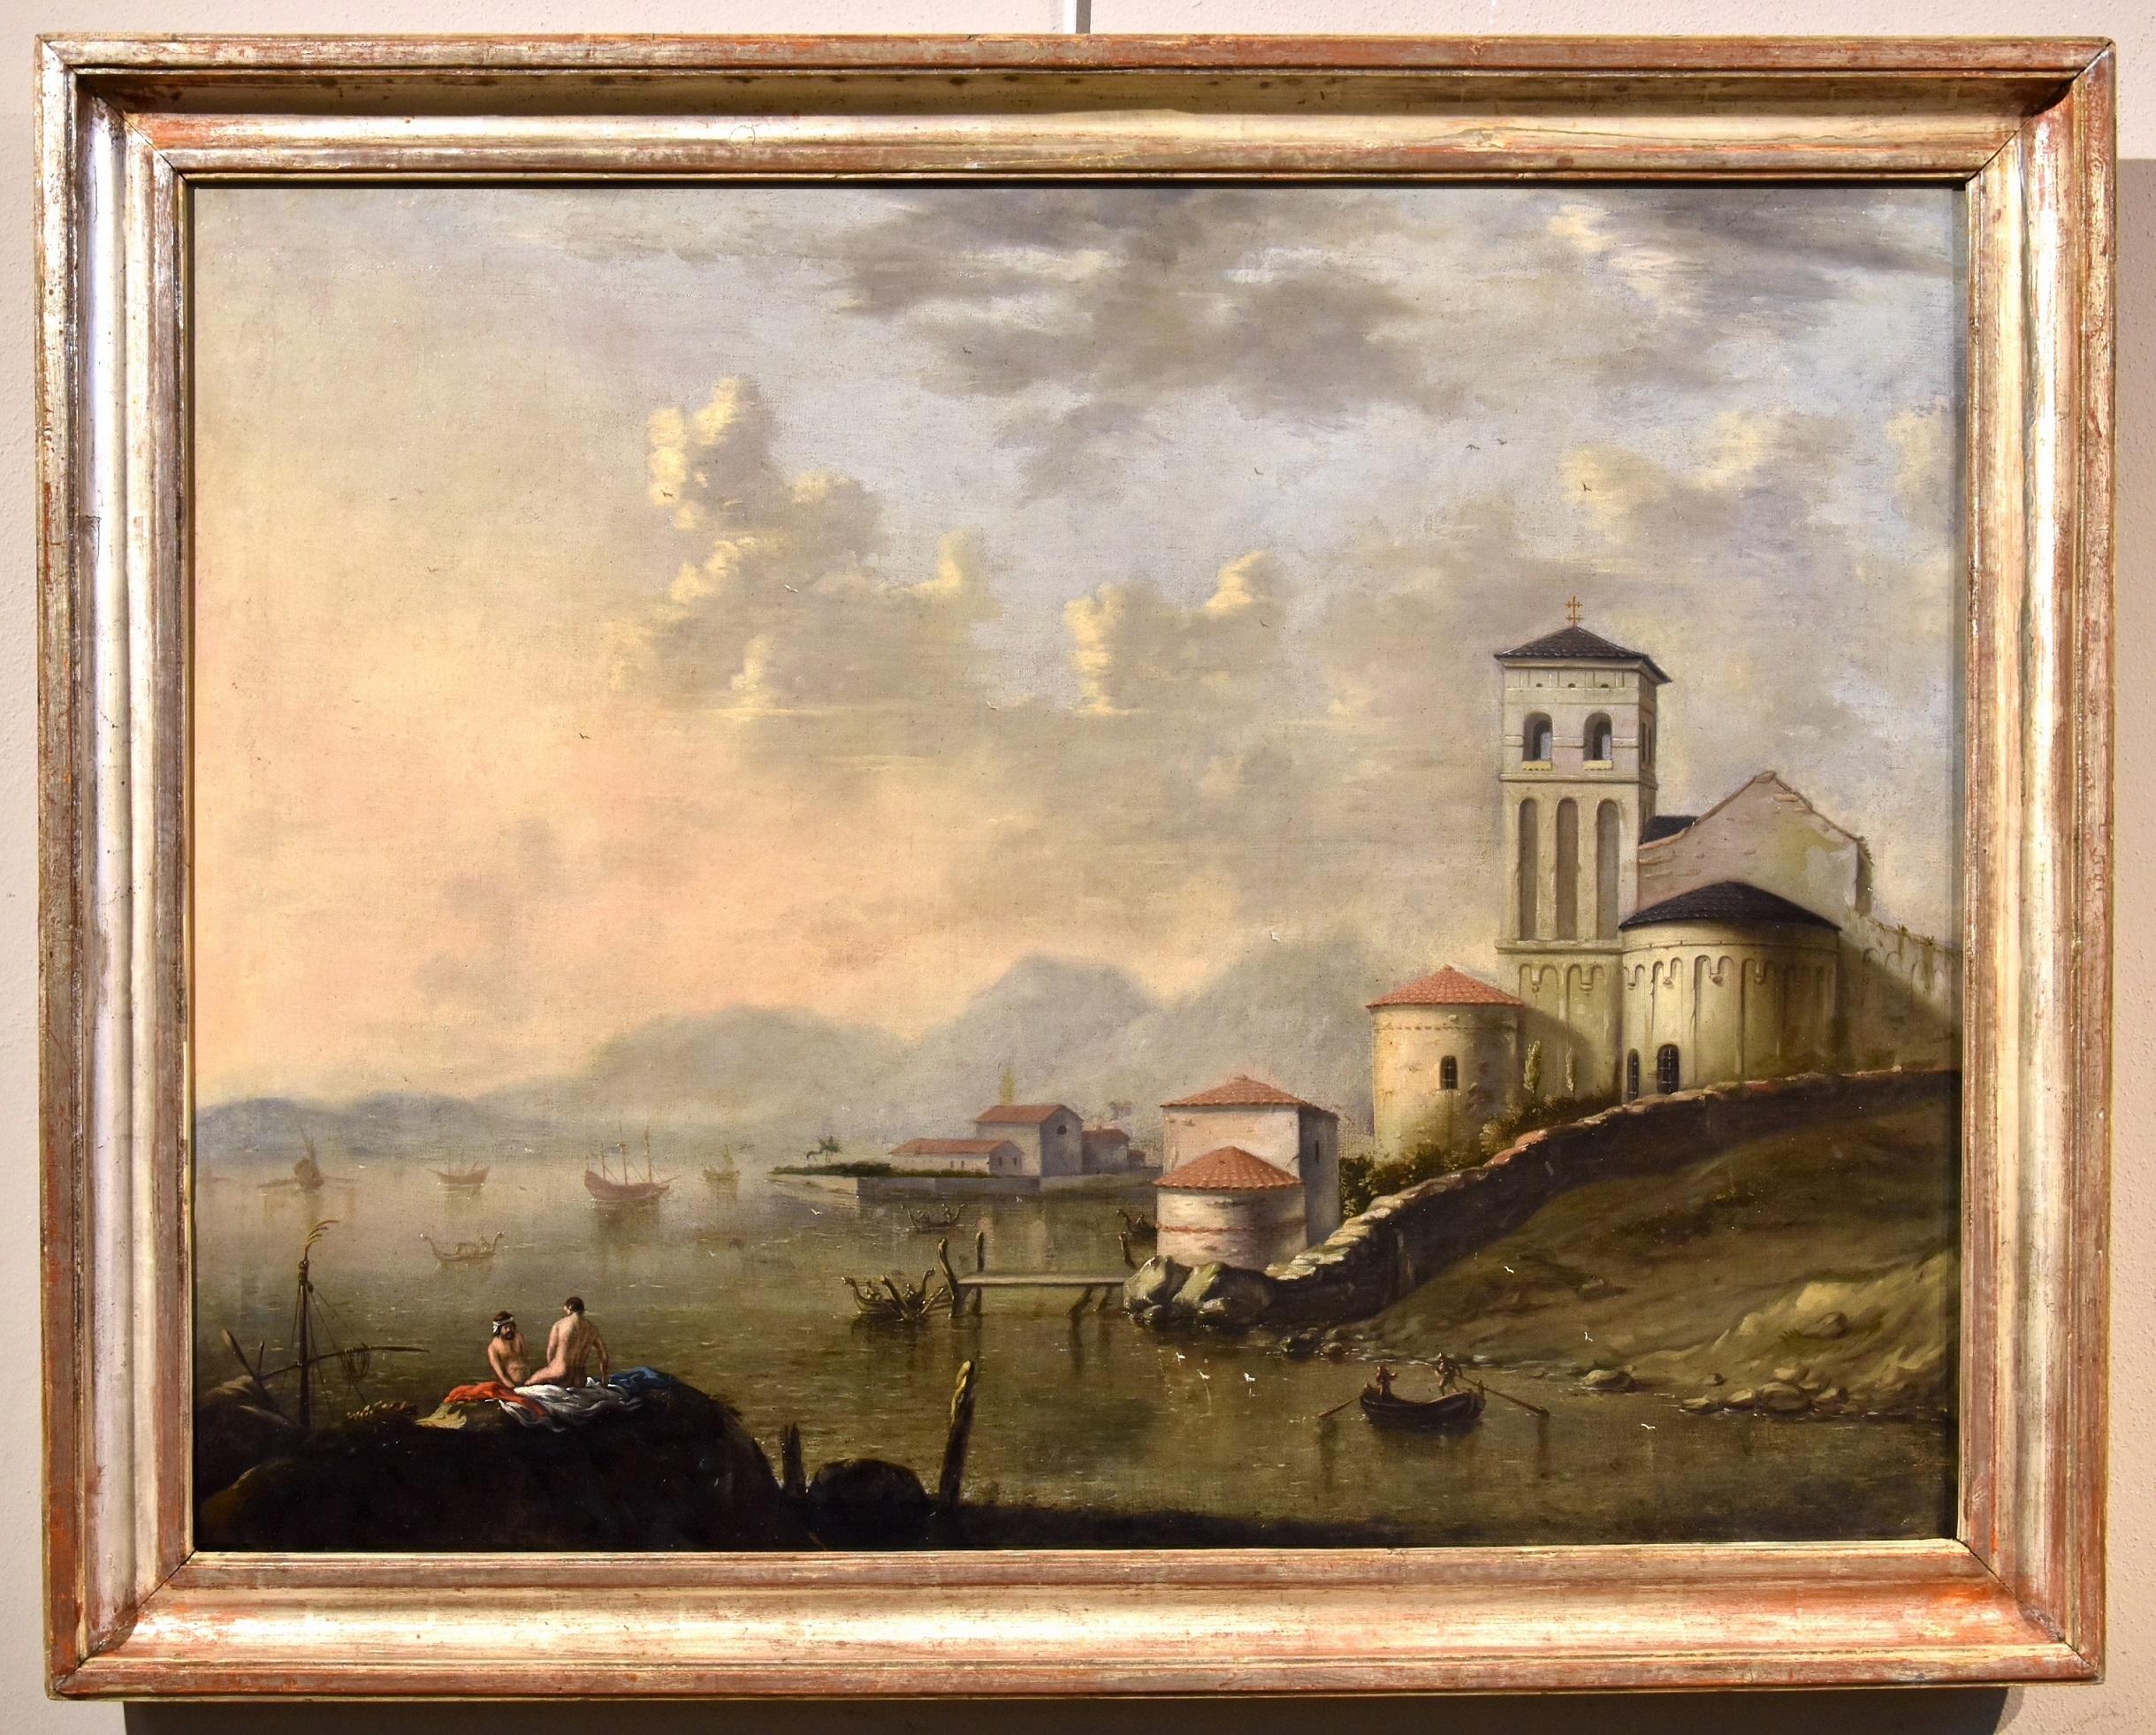 Flemish painter active in Italy in the eighteenth century Landscape Painting – Landschaftsgemälde, Öl auf Leinwand, flämisch, Alter Meister, 18. Jahrhundert, italienische Kunst